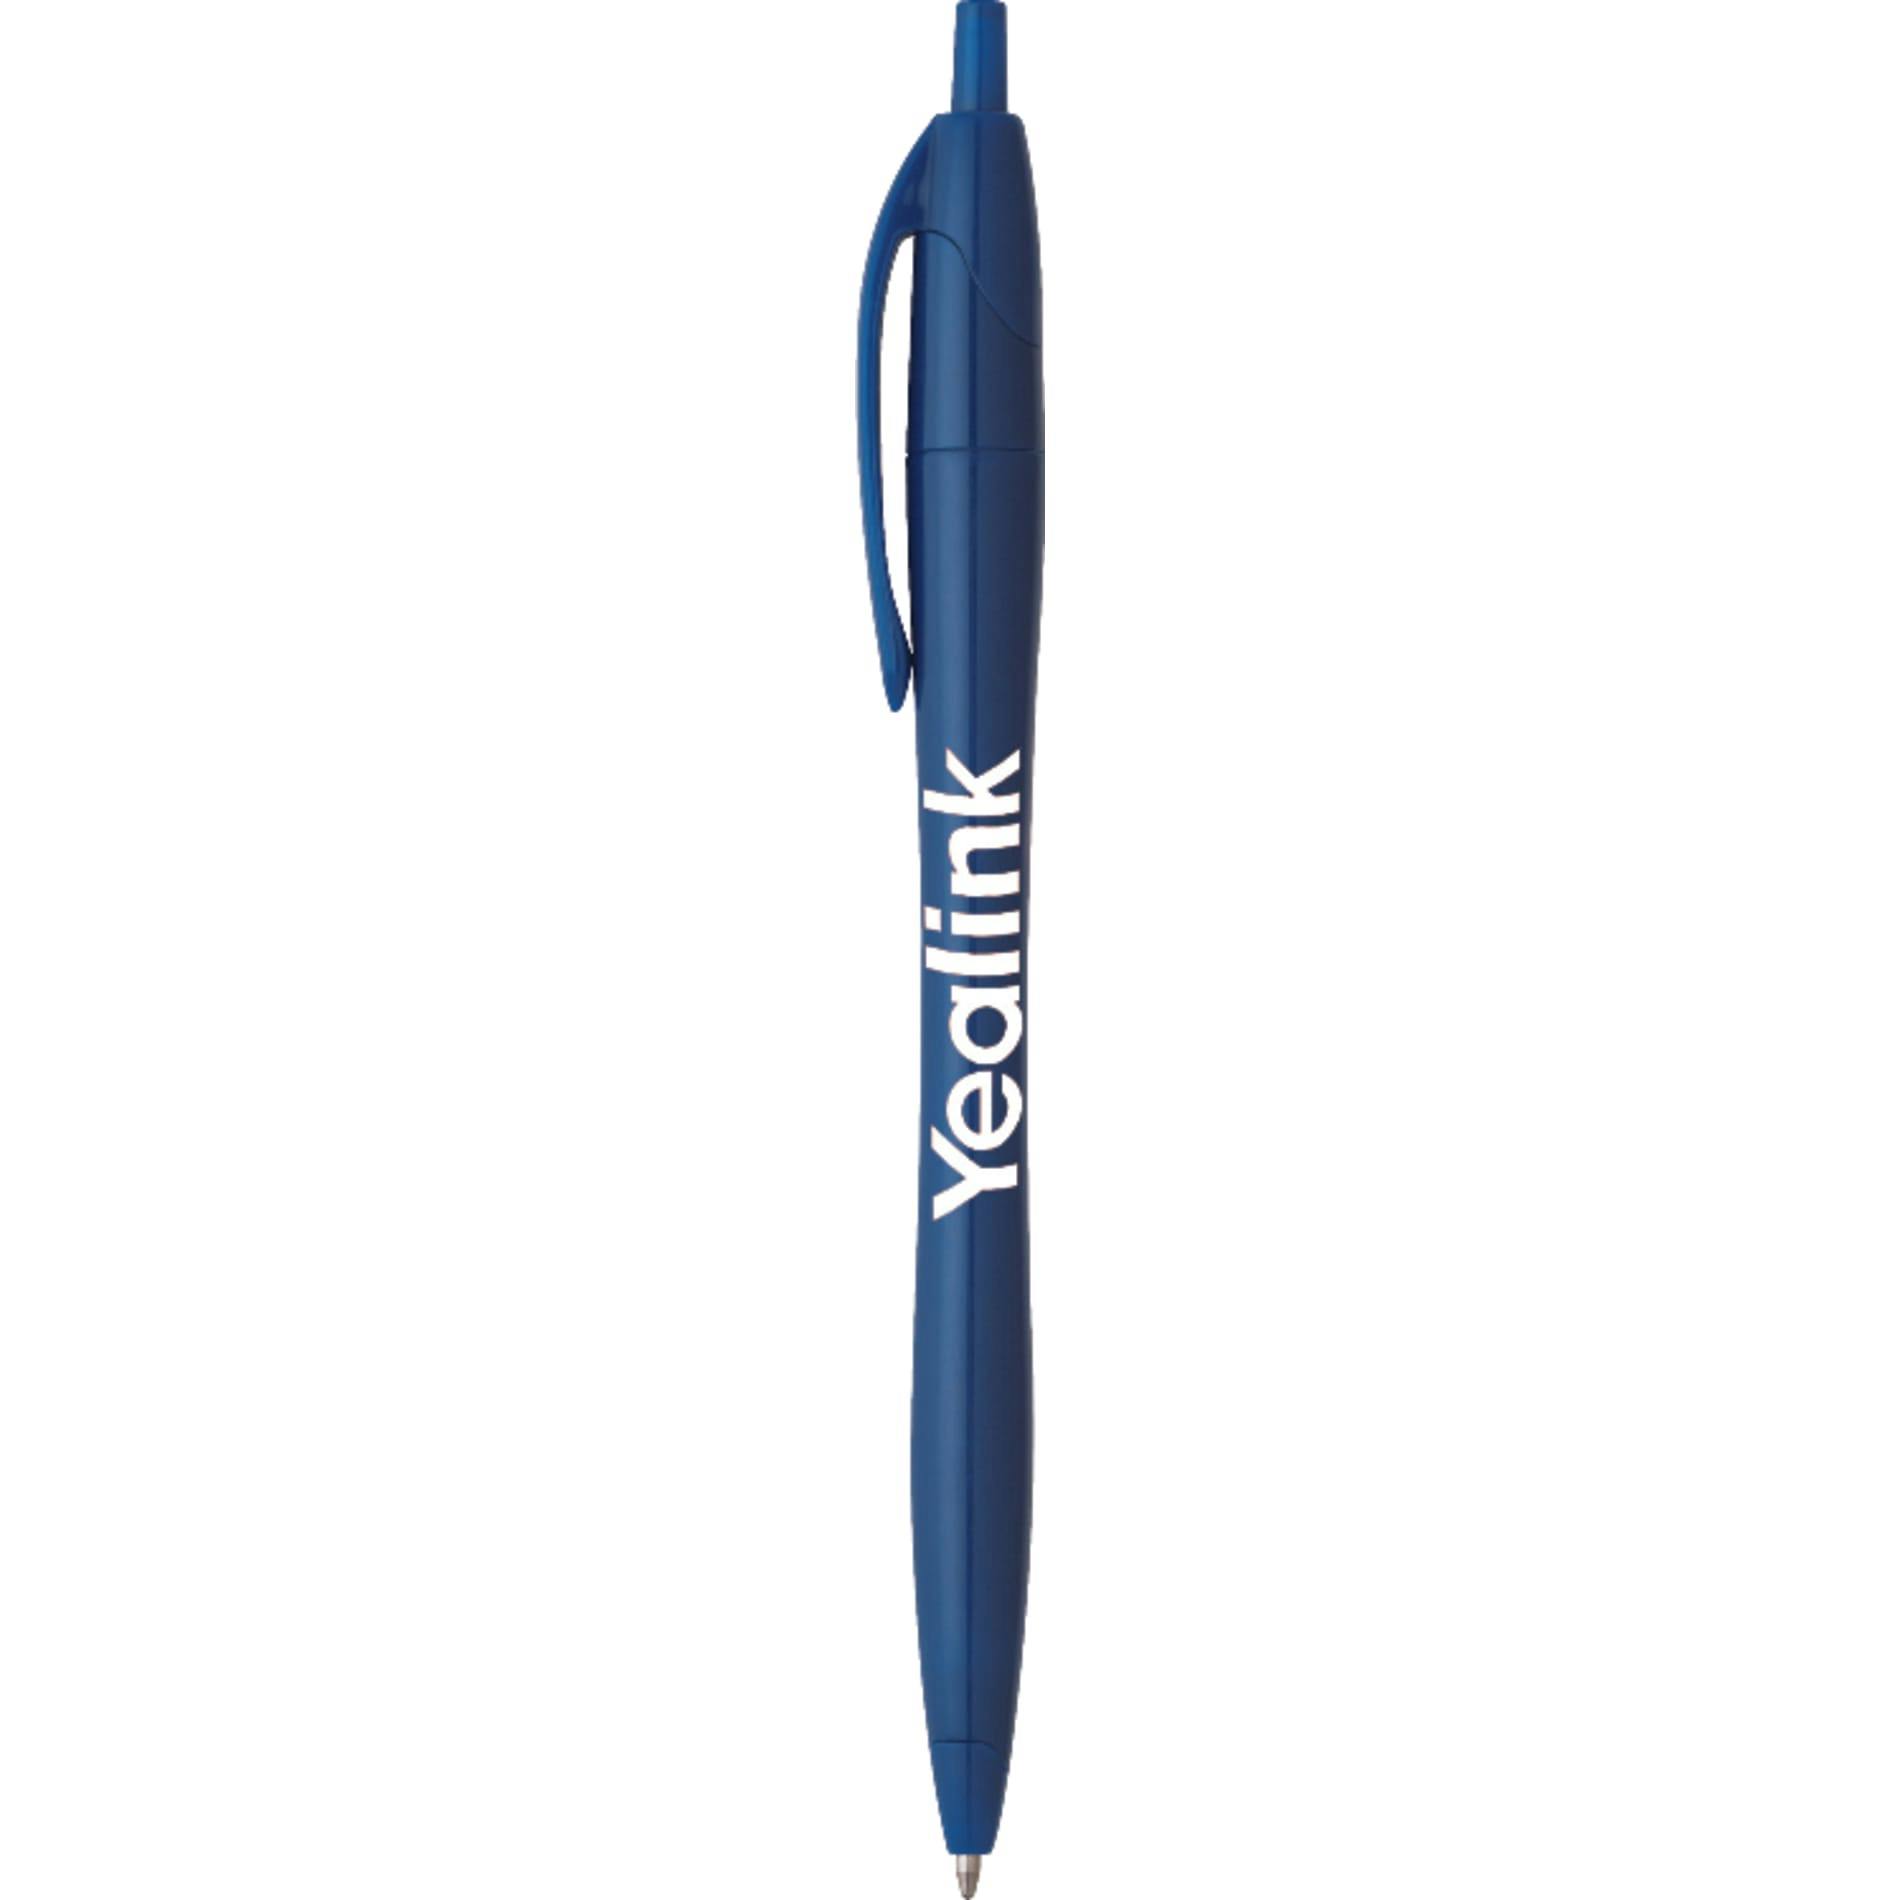 Cougar Ballpoint Pen - additional Image 1